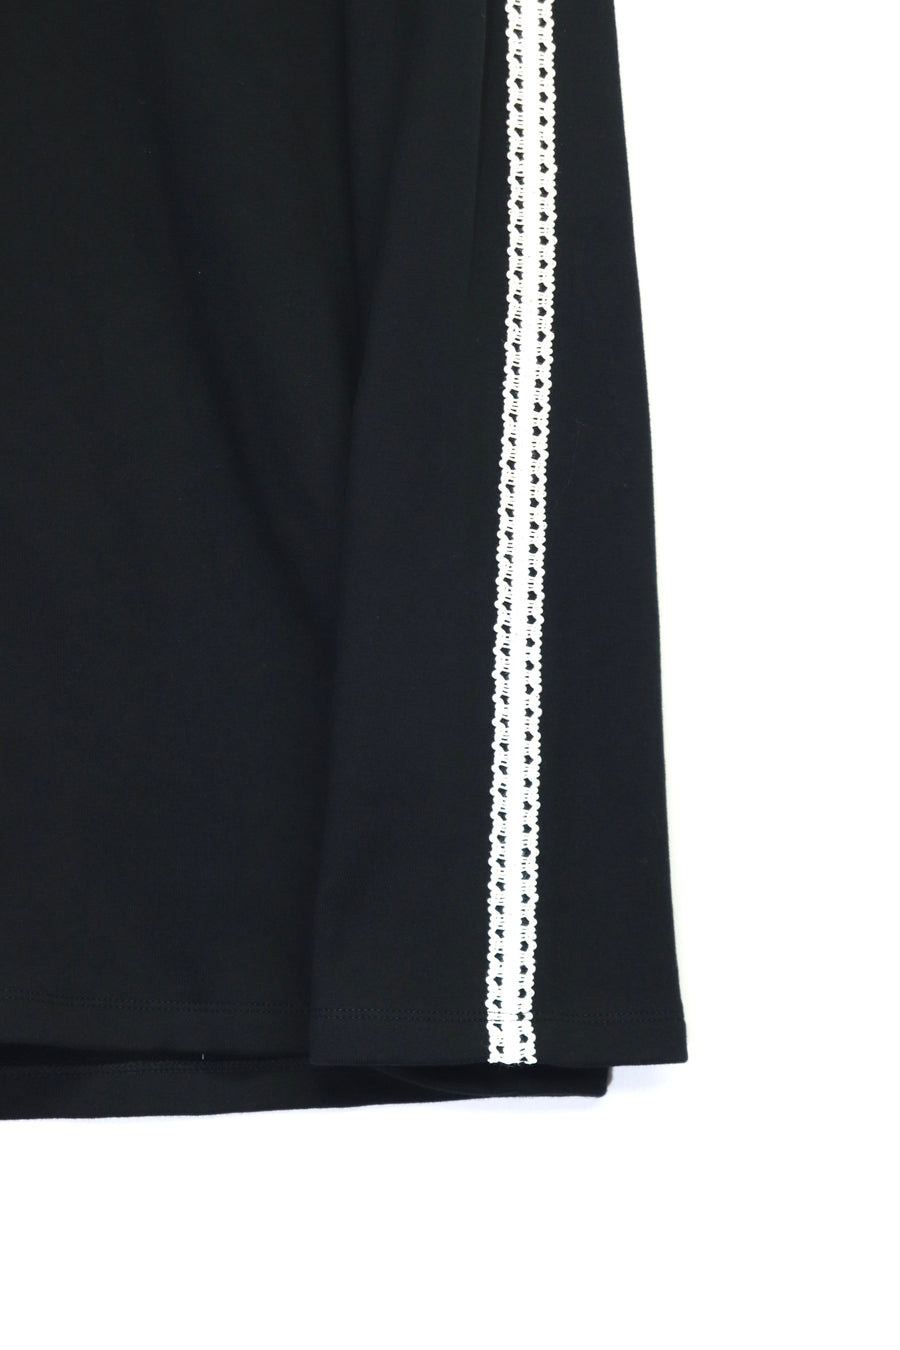 Taiga Igari  Relief Sweat Shirt(BLACK)